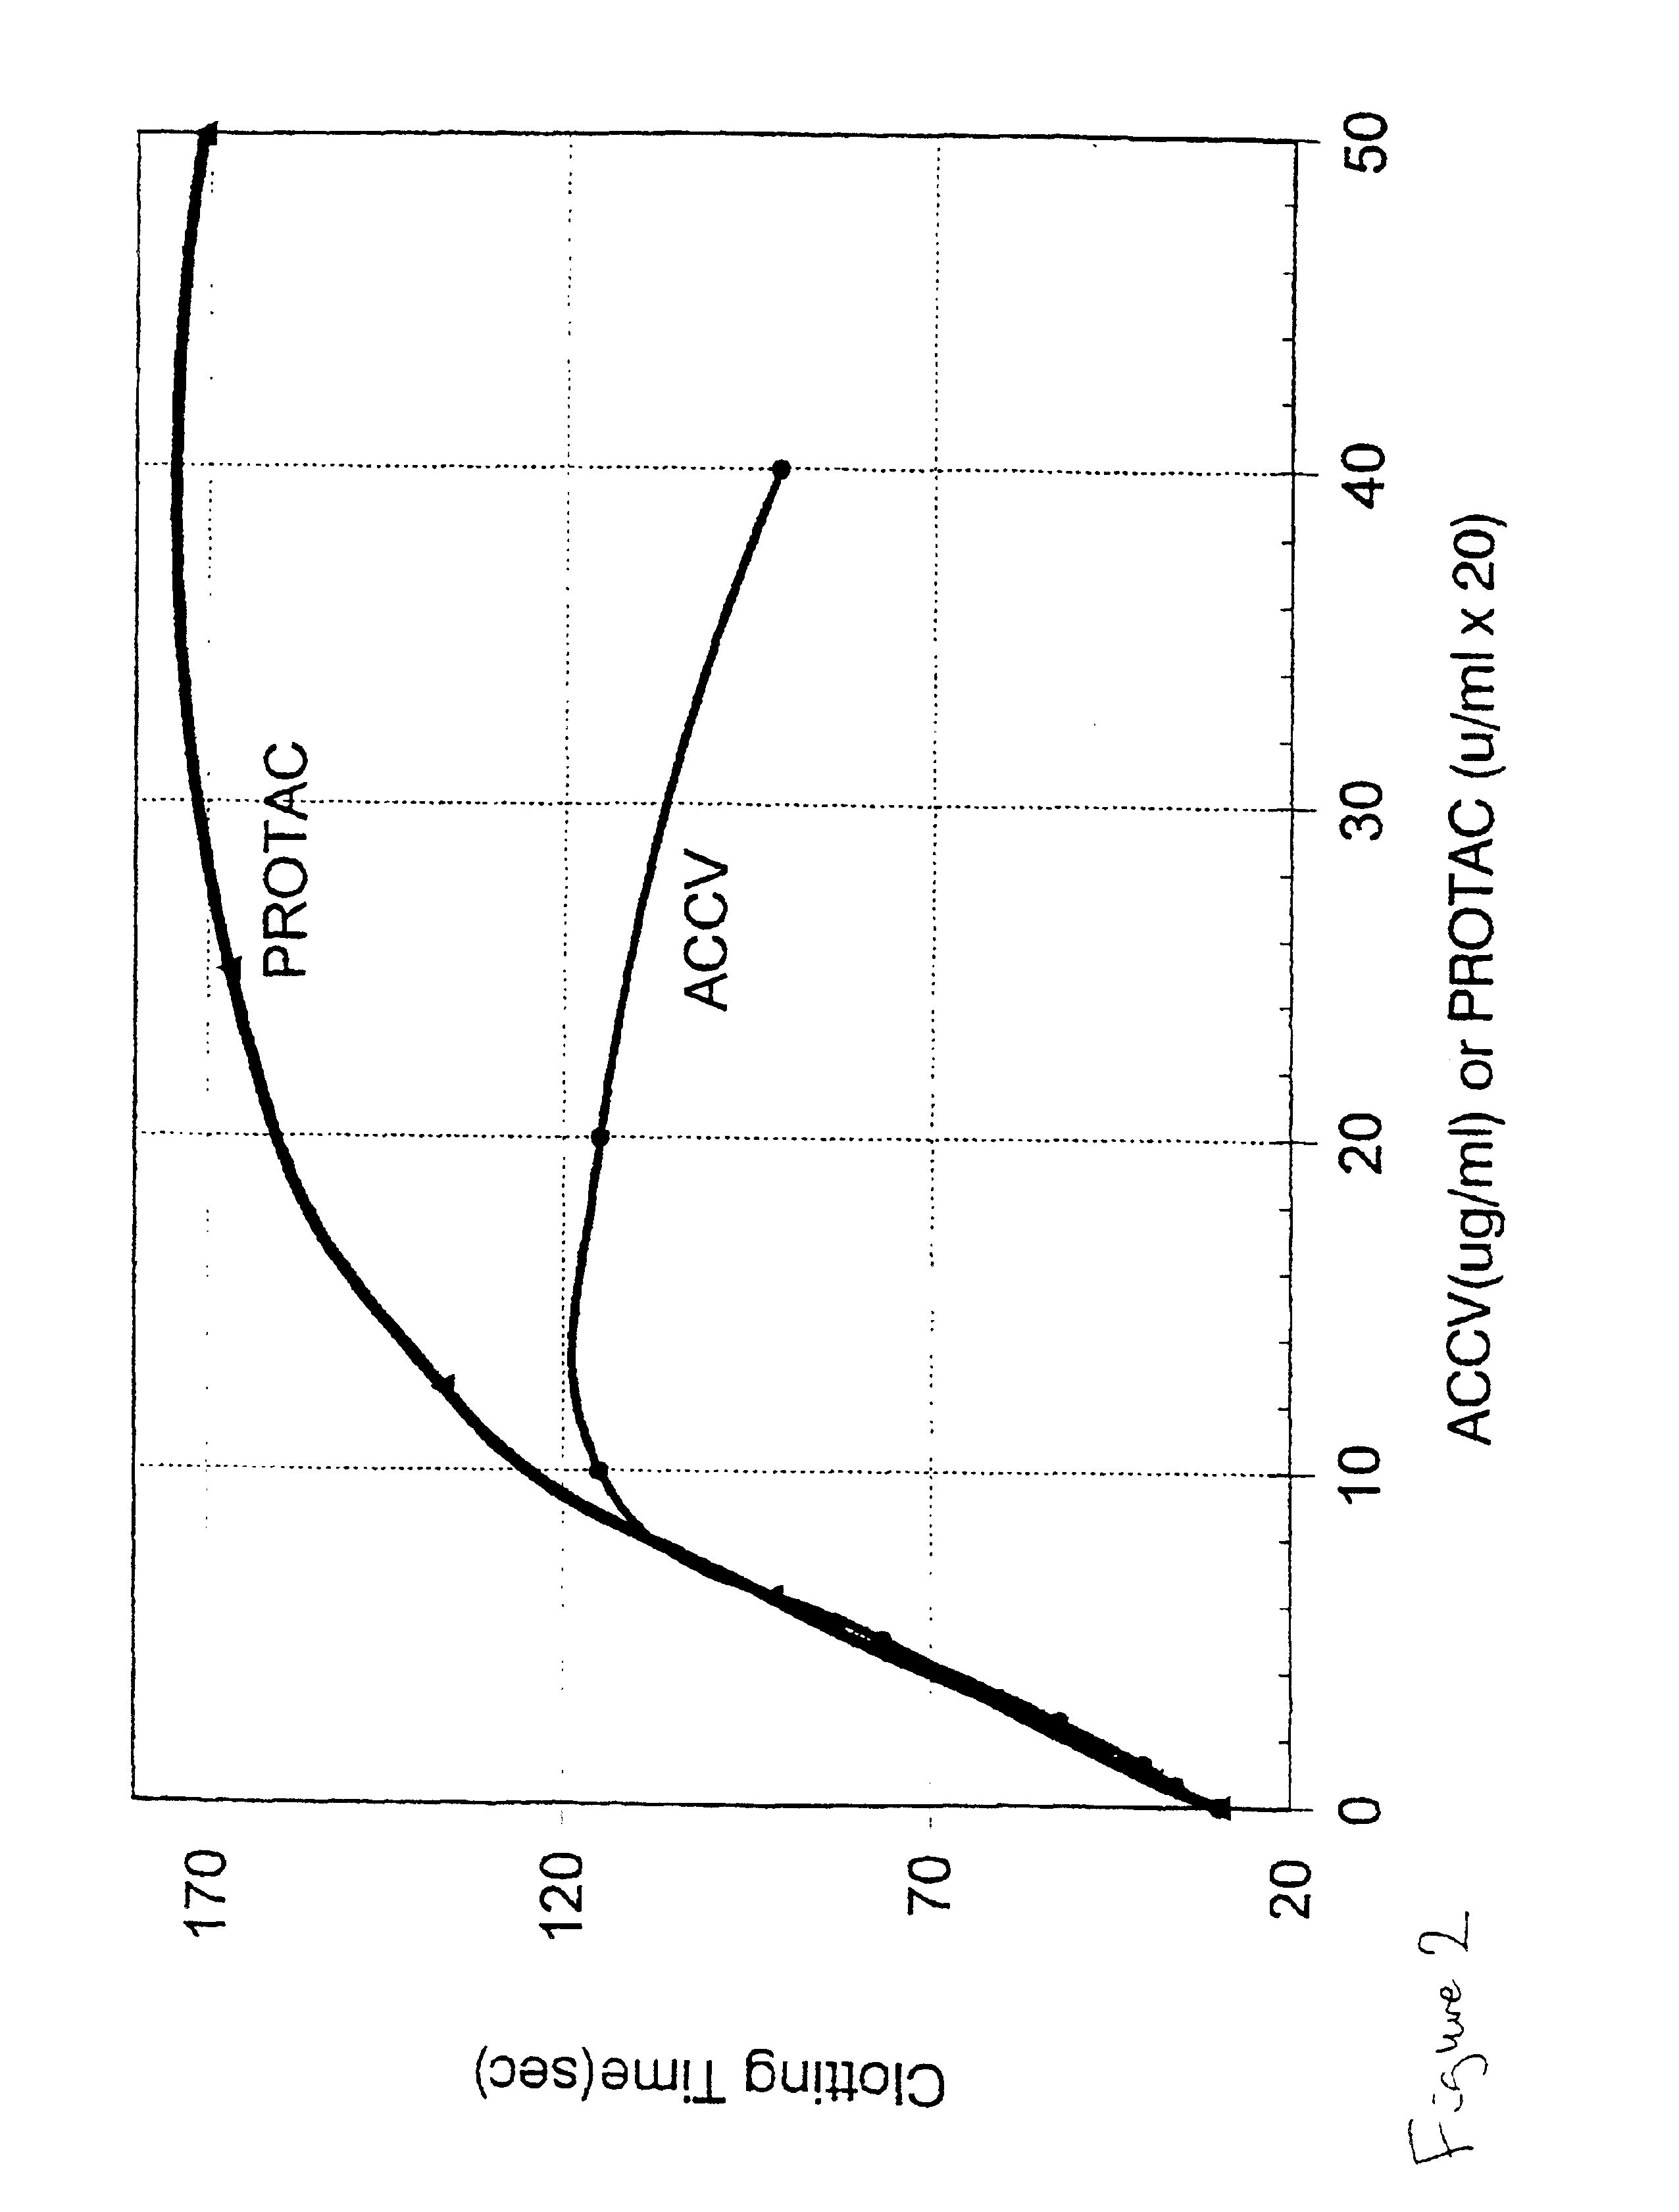 Method for determining the coagulation potential of a plasma sample